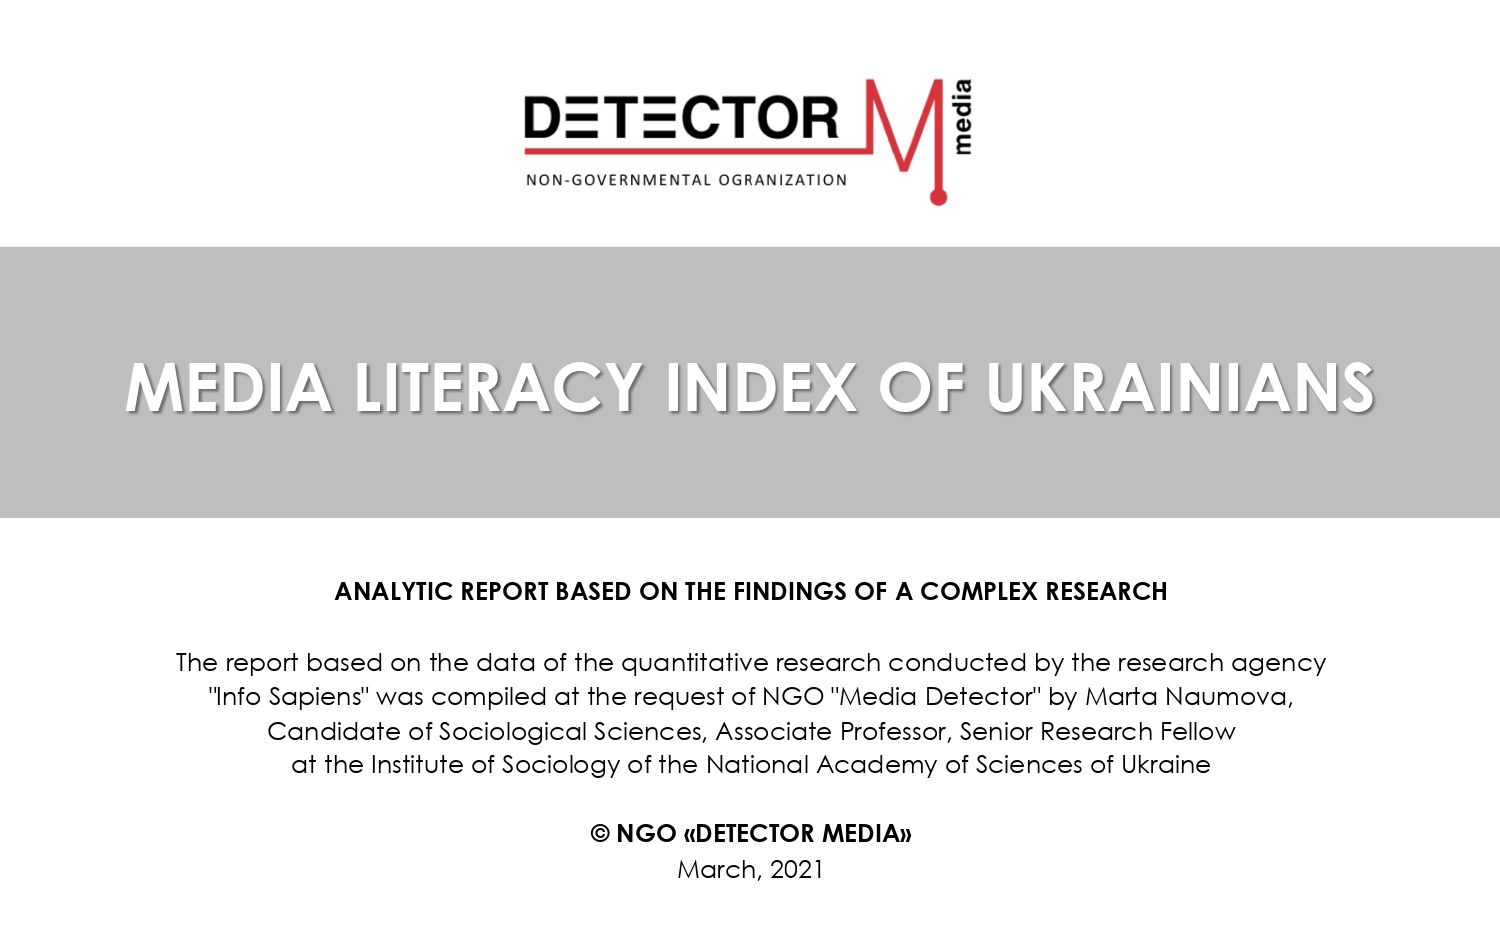 Media literacy index of Ukrainians